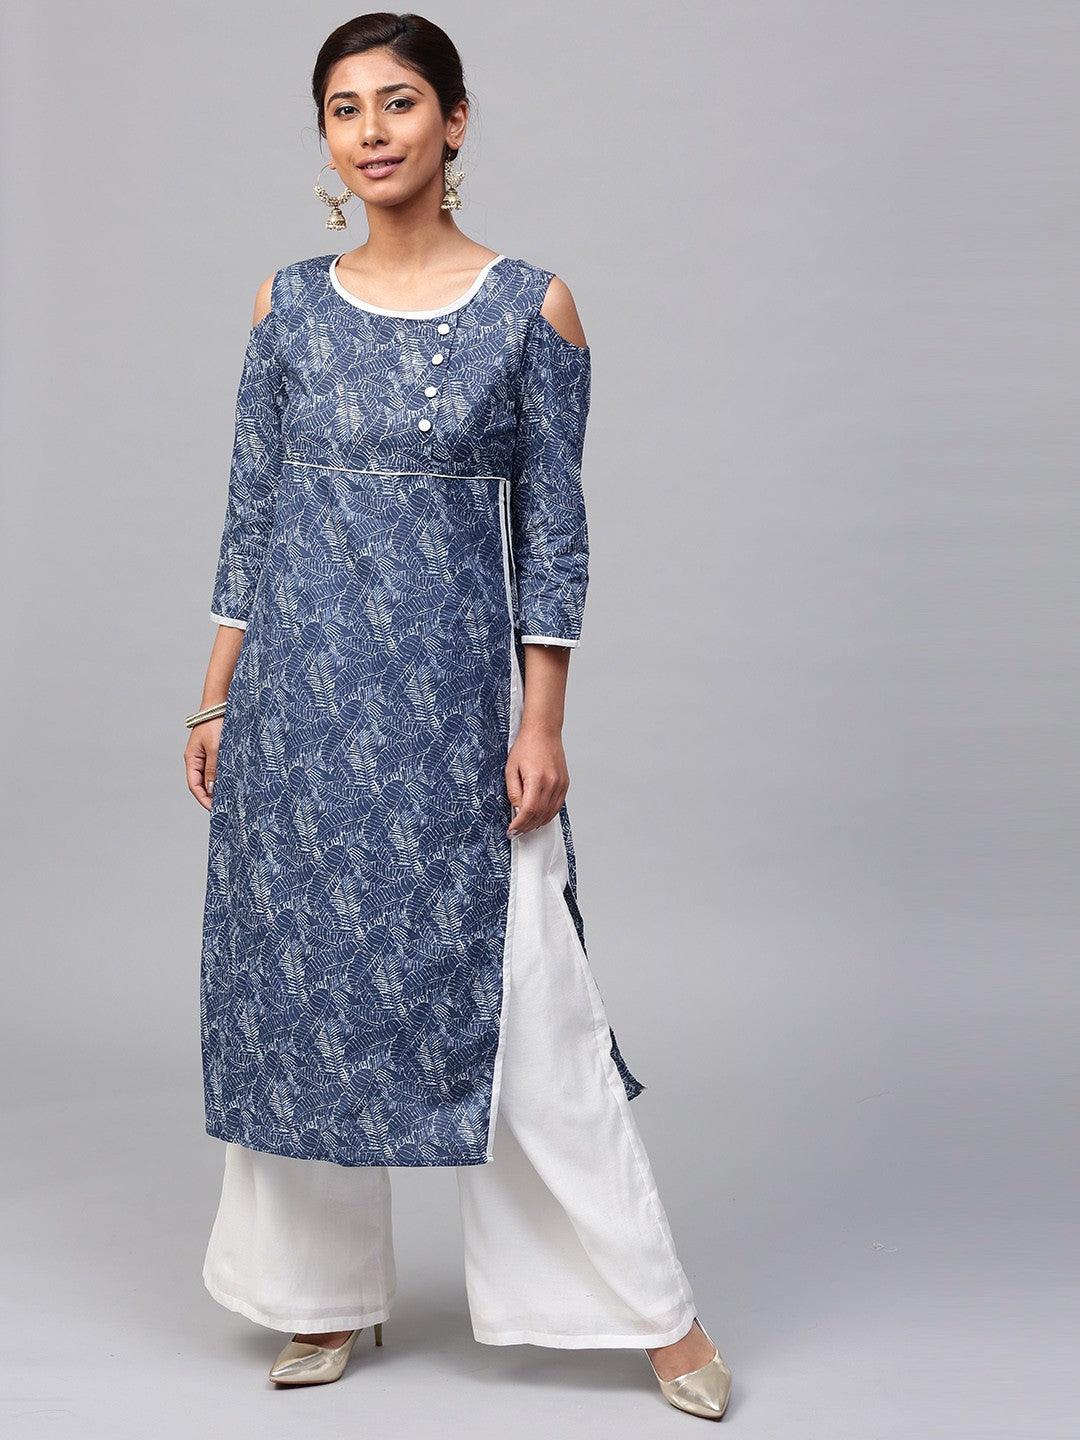 50 Latest Types of Cold Shoulder Kurti Sleeves Designs (2022) - Tips and  Beauty | Cold shoulder kurti, Kurti neck designs, Designer kurti patterns